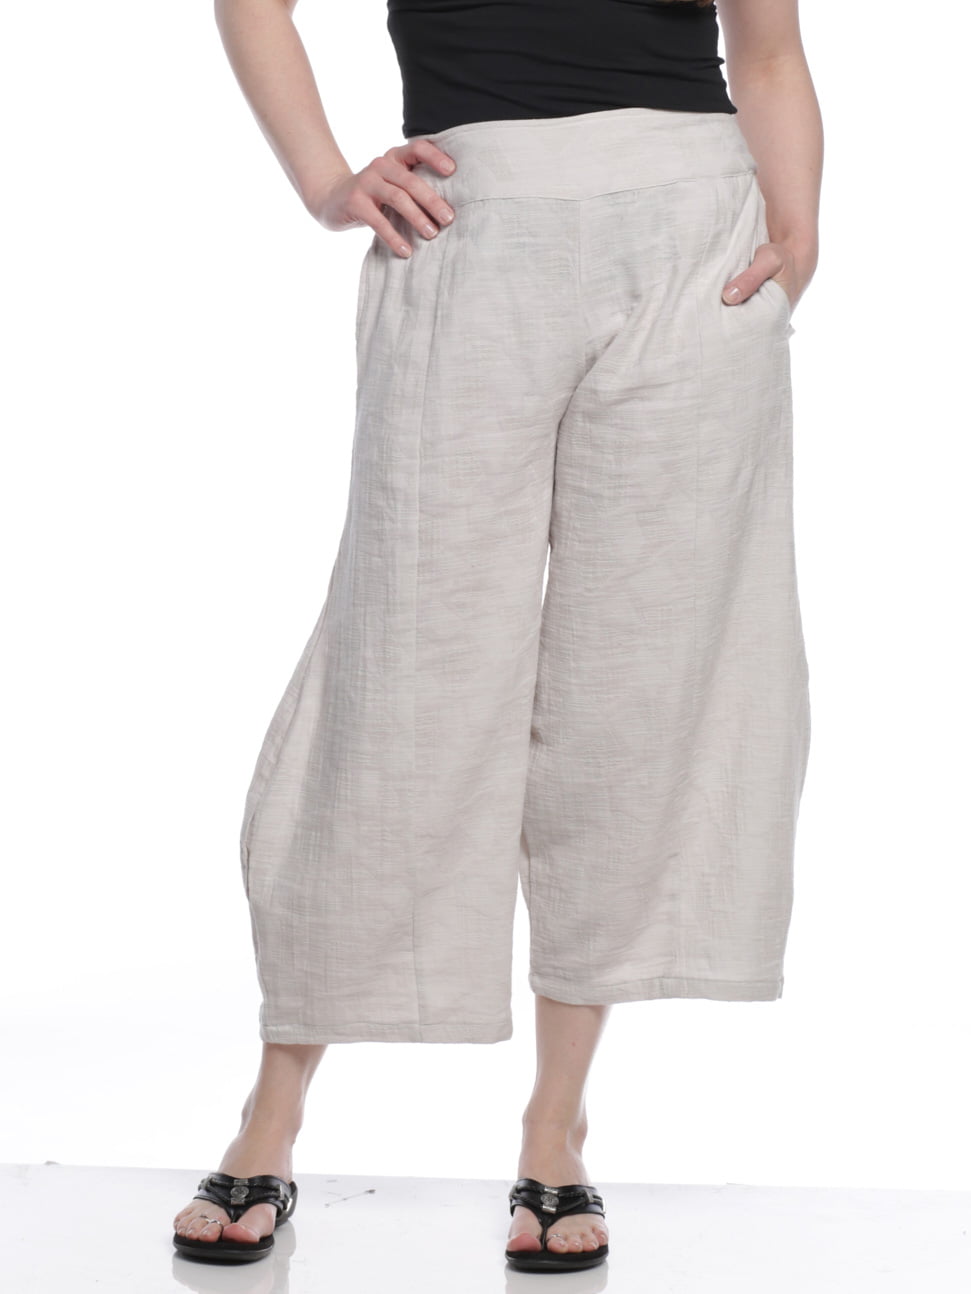 Windhorse Women's Mantra Pants, Off White, L/XL 